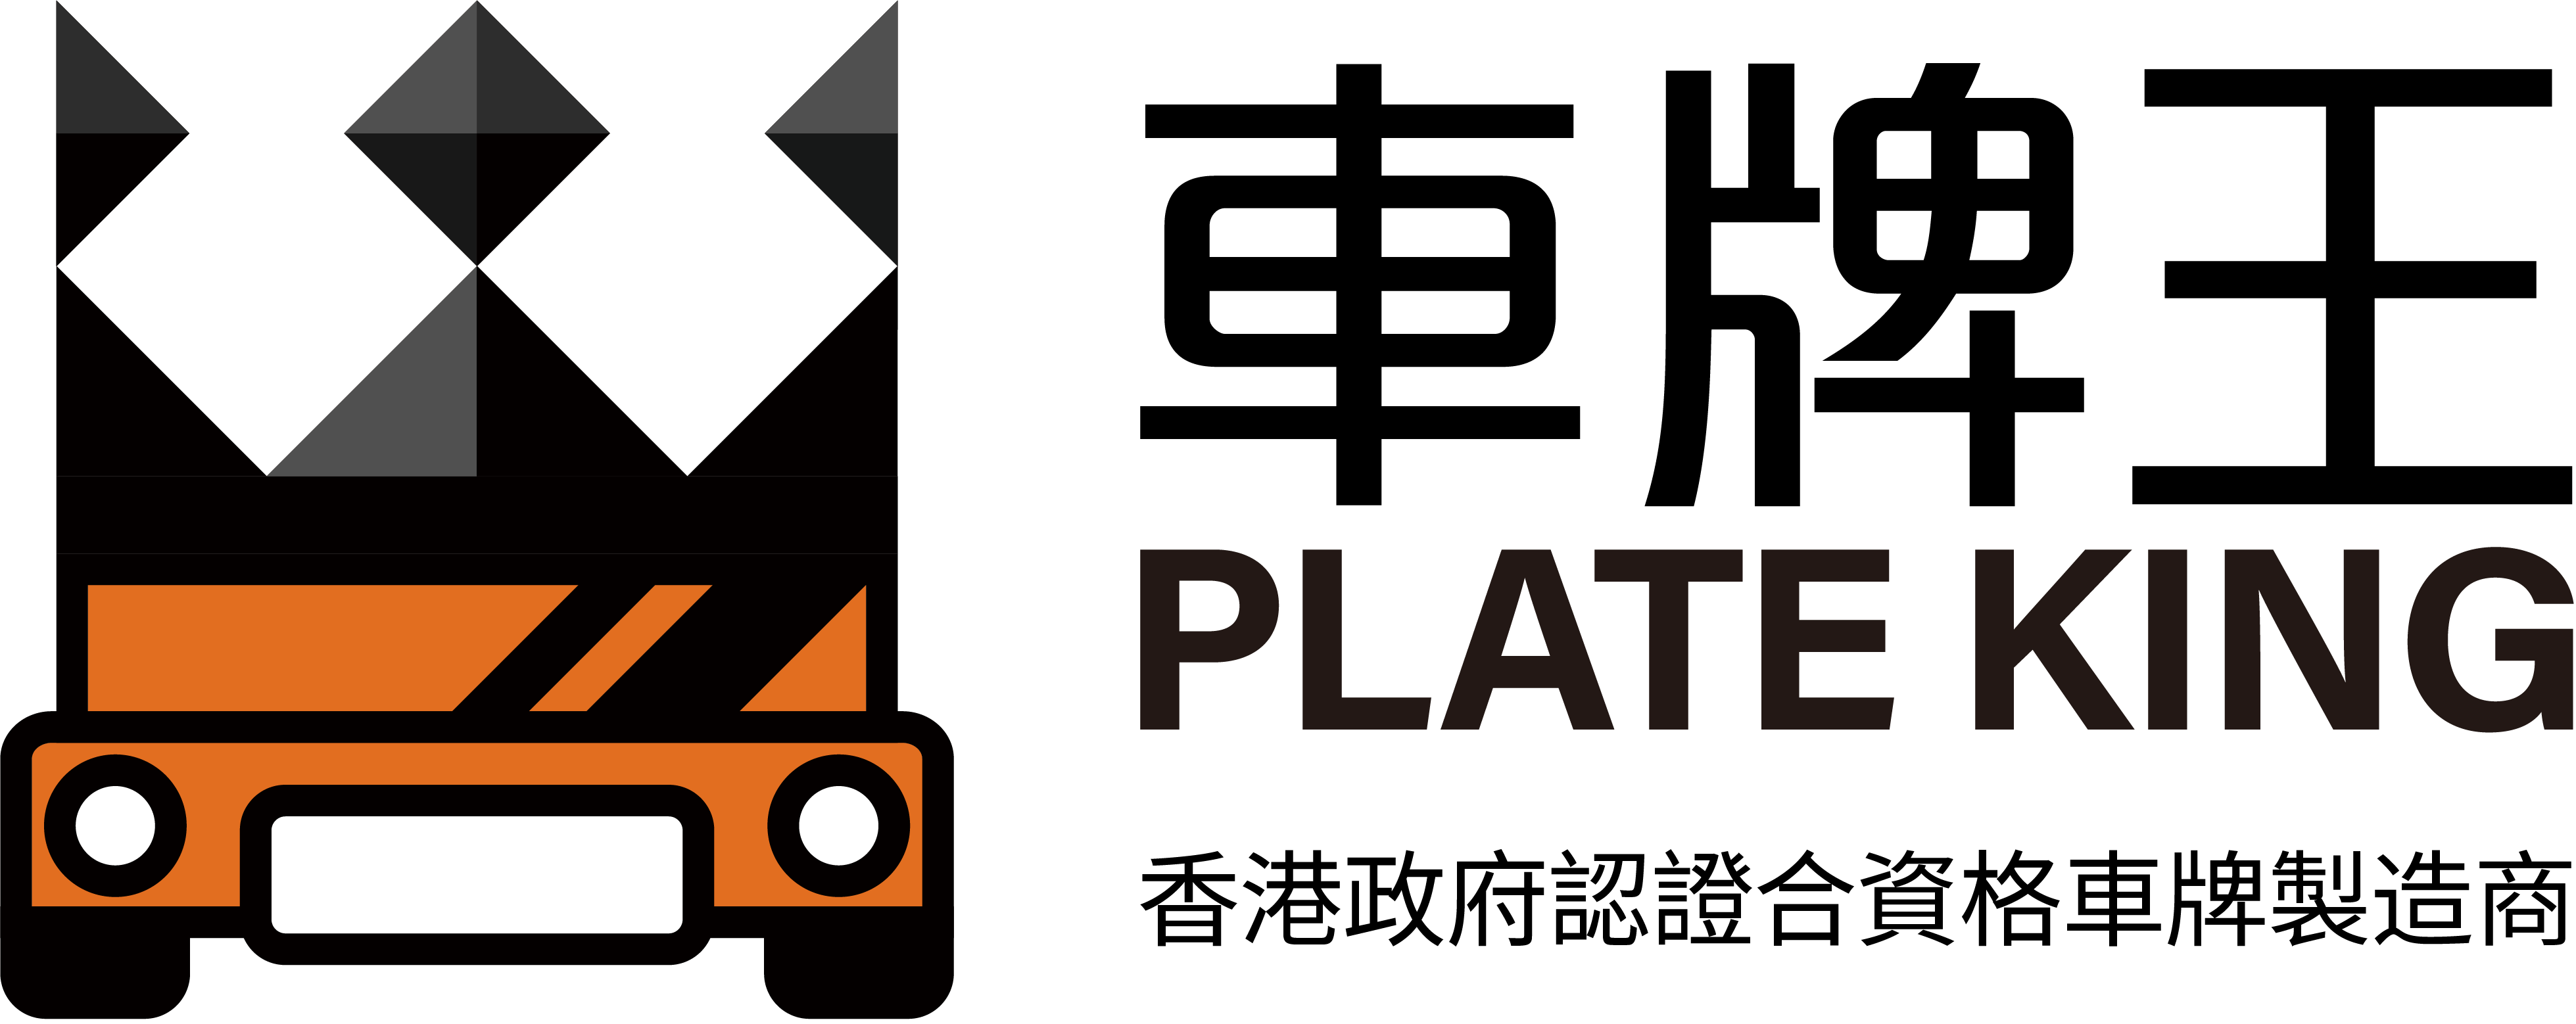 Plate King Logo